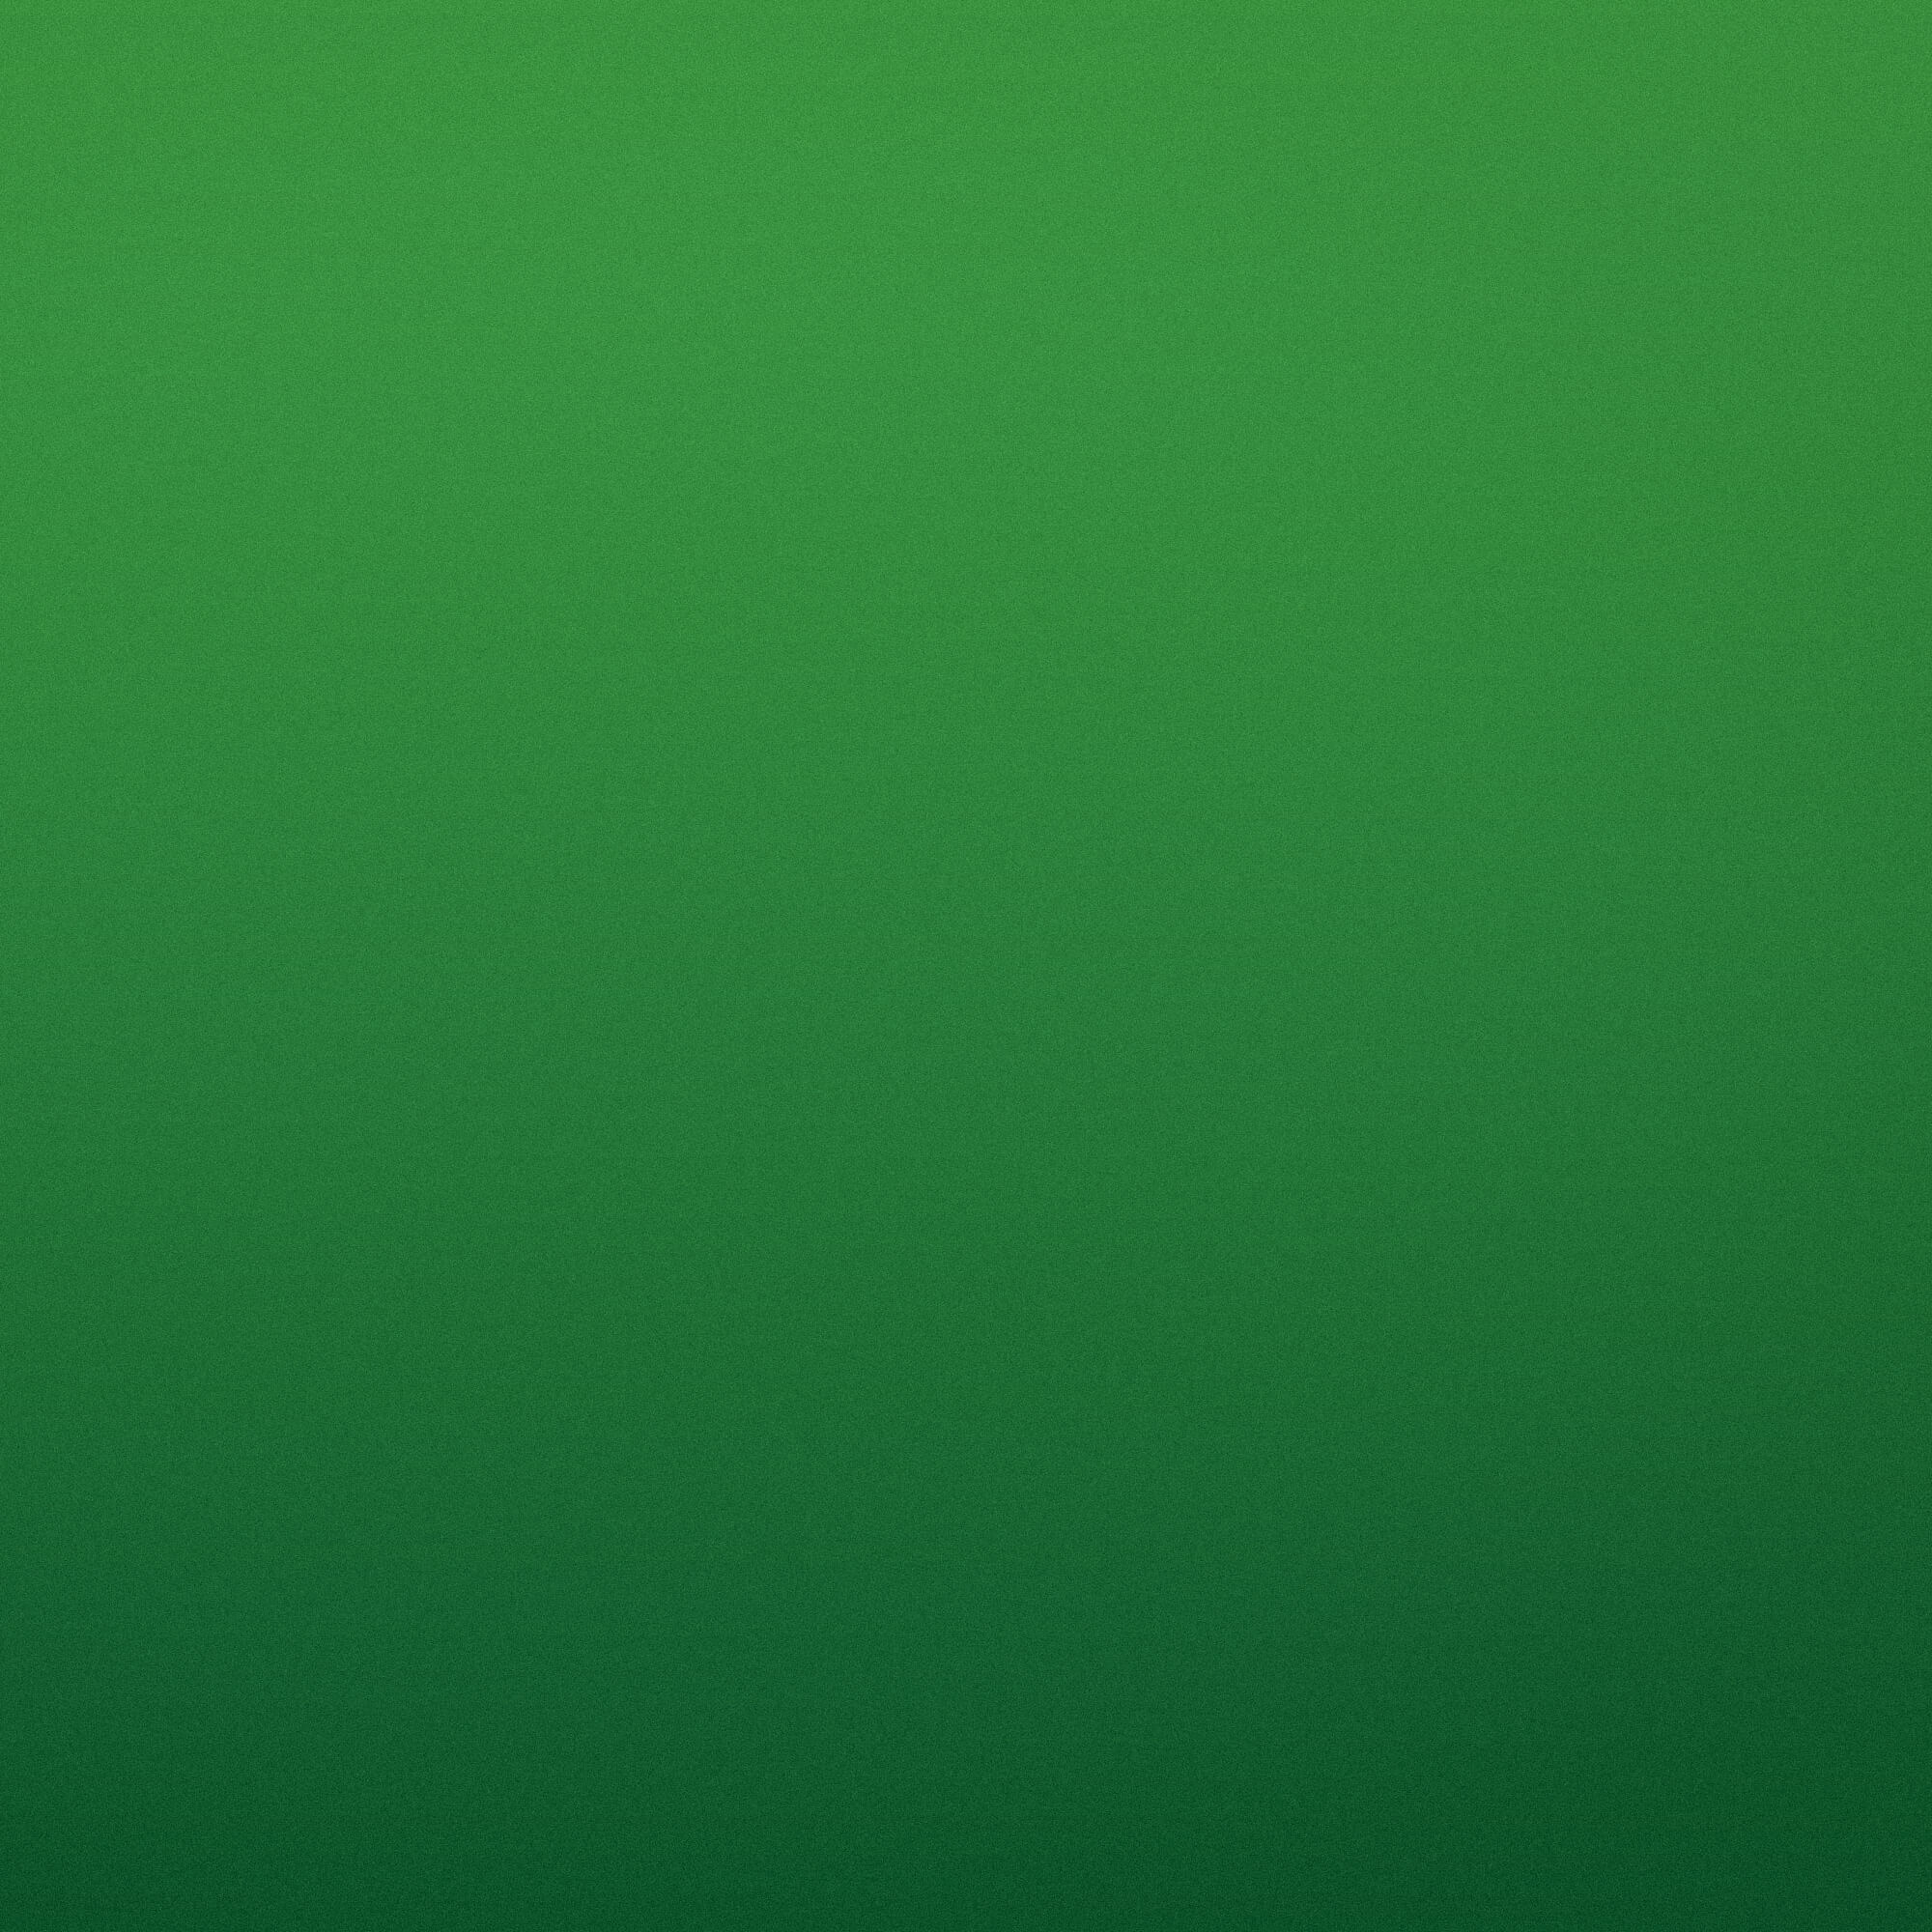 30,000+ Free Green Wallpaper & Green Images - Pixabay